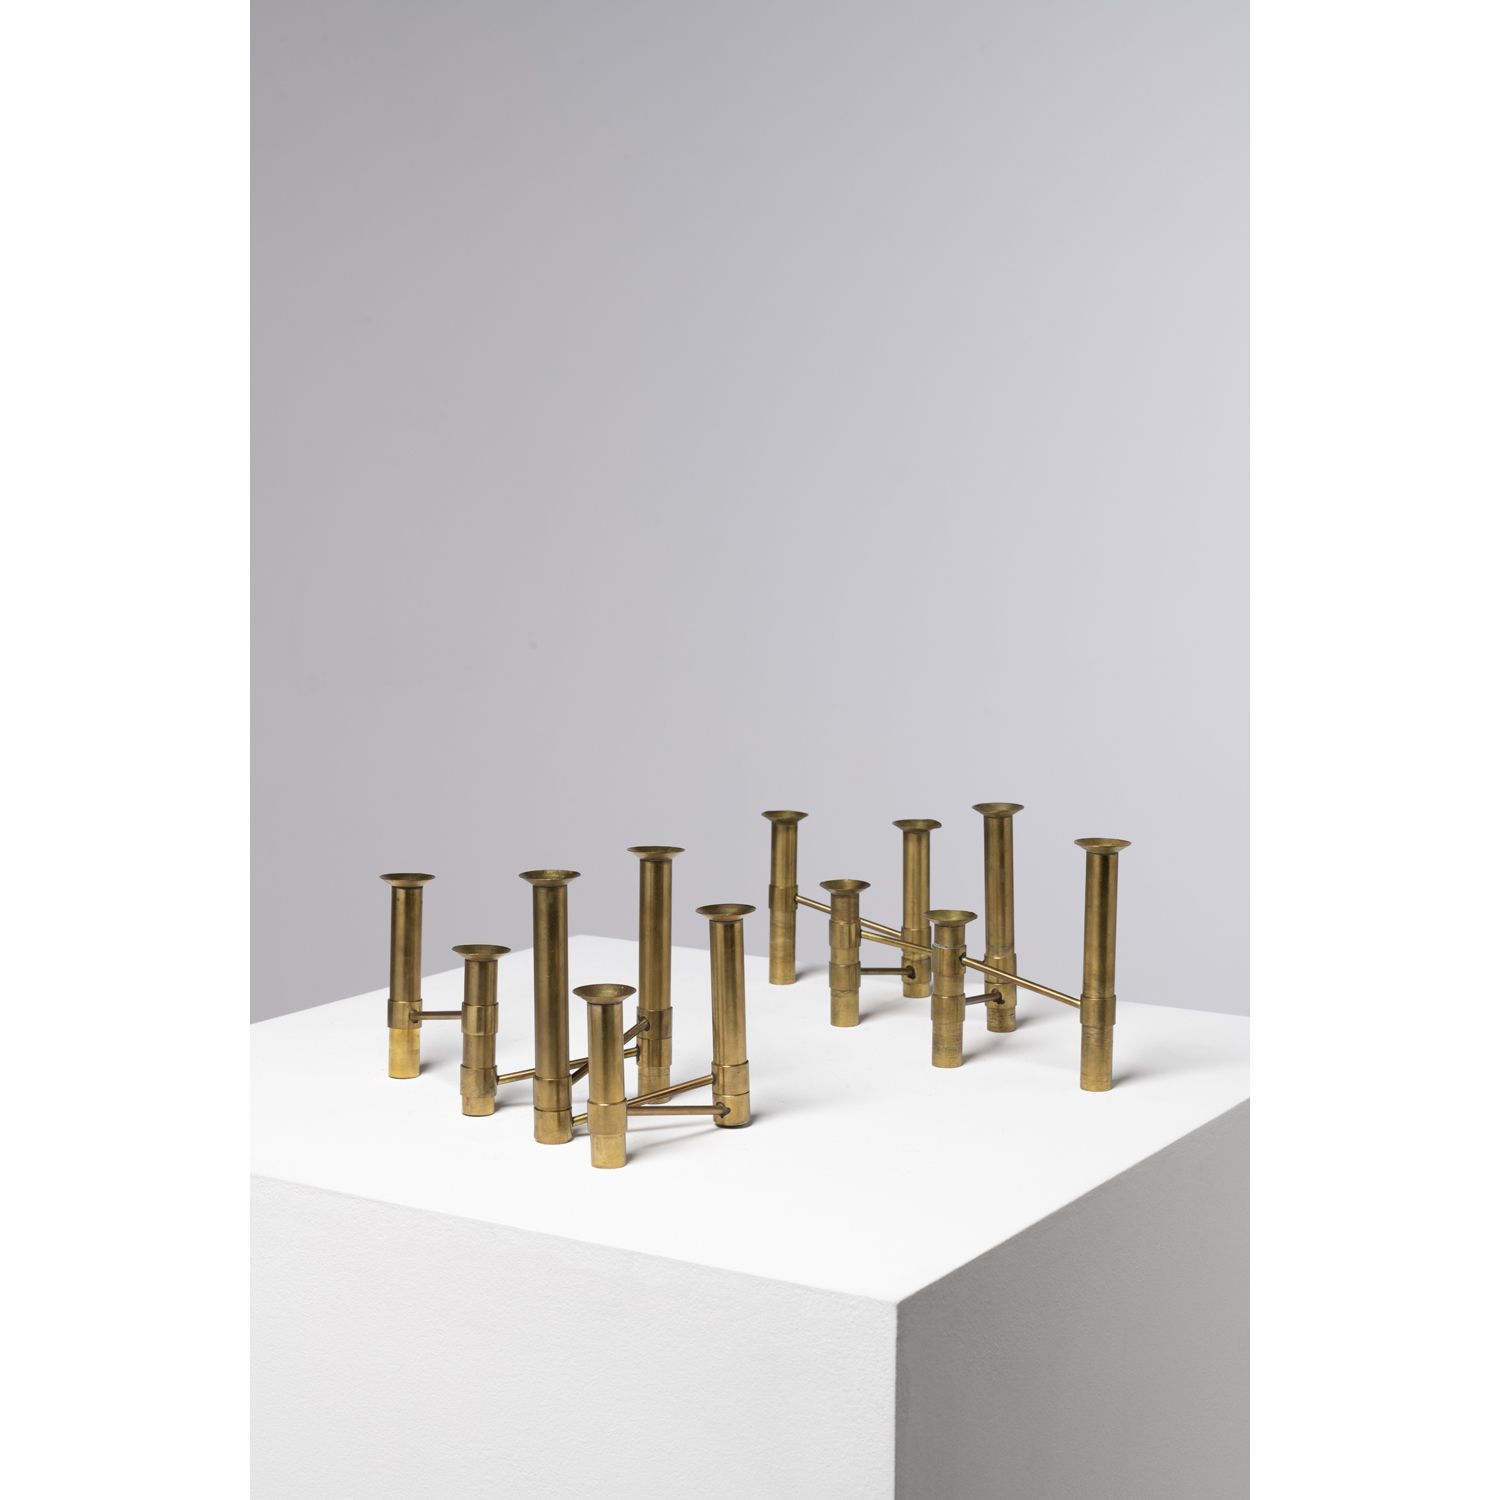 Null 塔皮奥-维尔卡拉(1915-1985)

不停地

一对烛台

黄铜

Kultakeskus版

设计于20世纪70年代

高14×宽25.5至50&hellip;